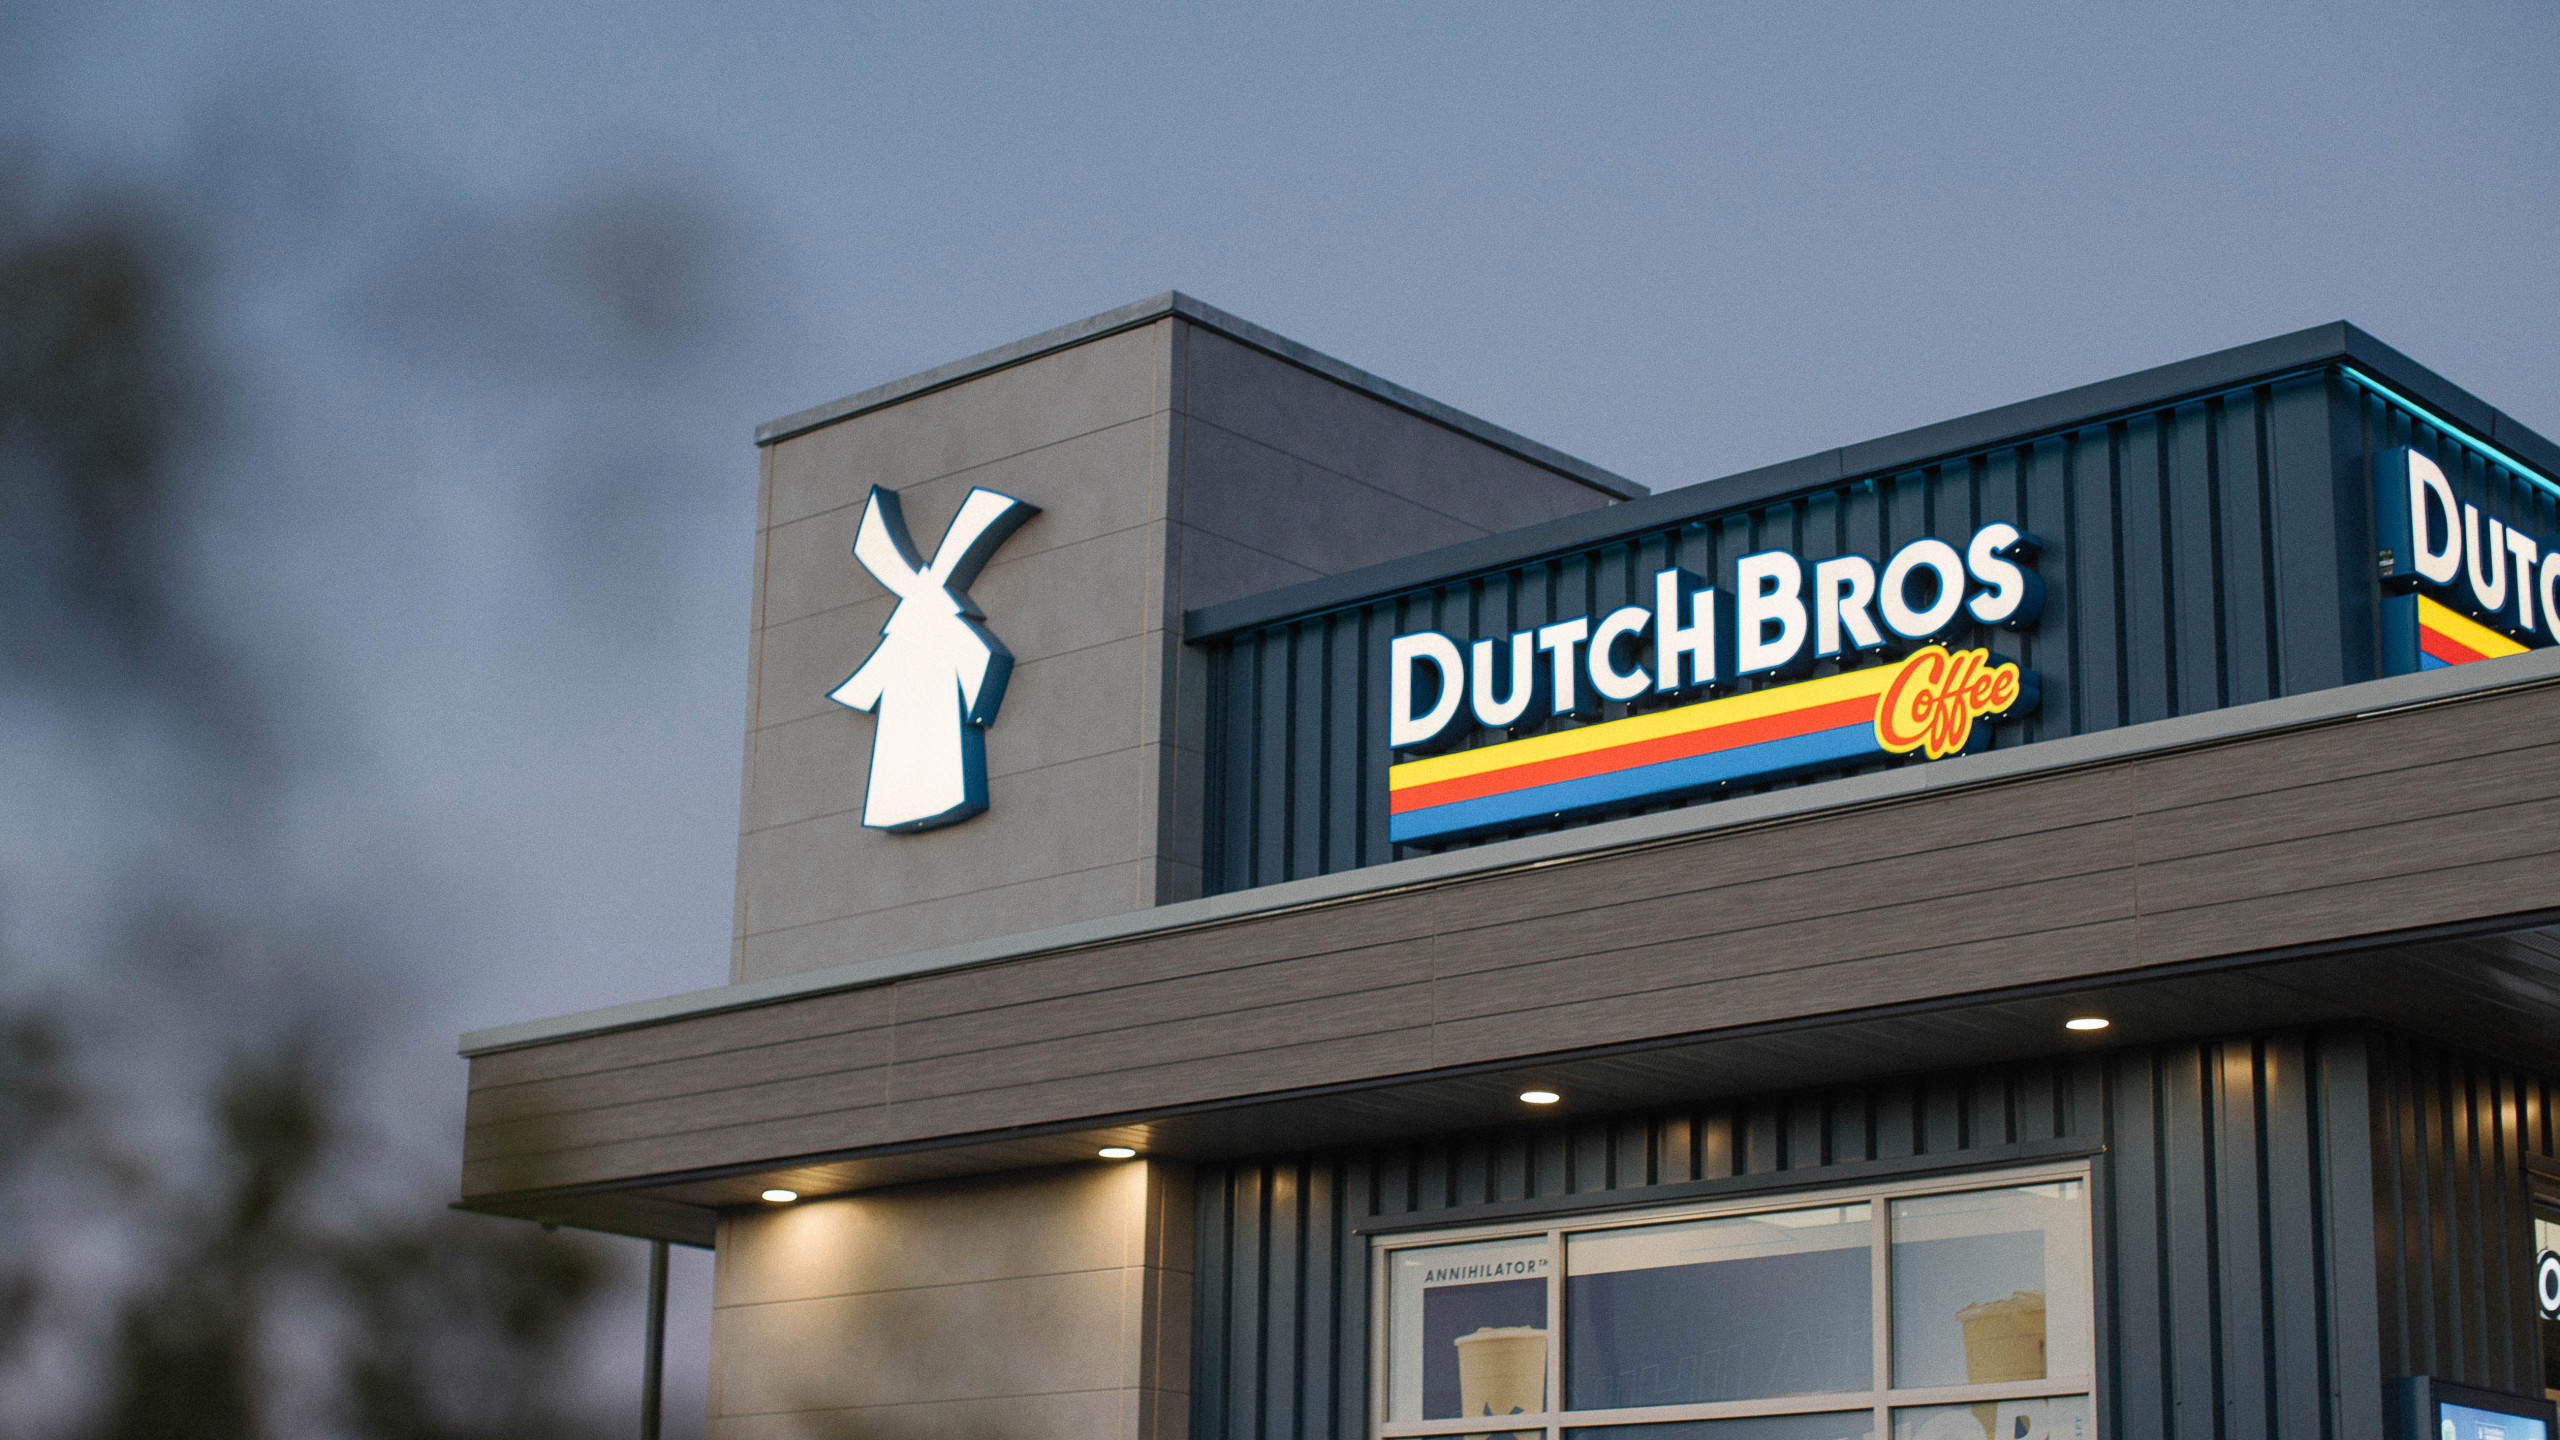 Dutch Bros Coffee opening in El Paso. KTSM 9 News